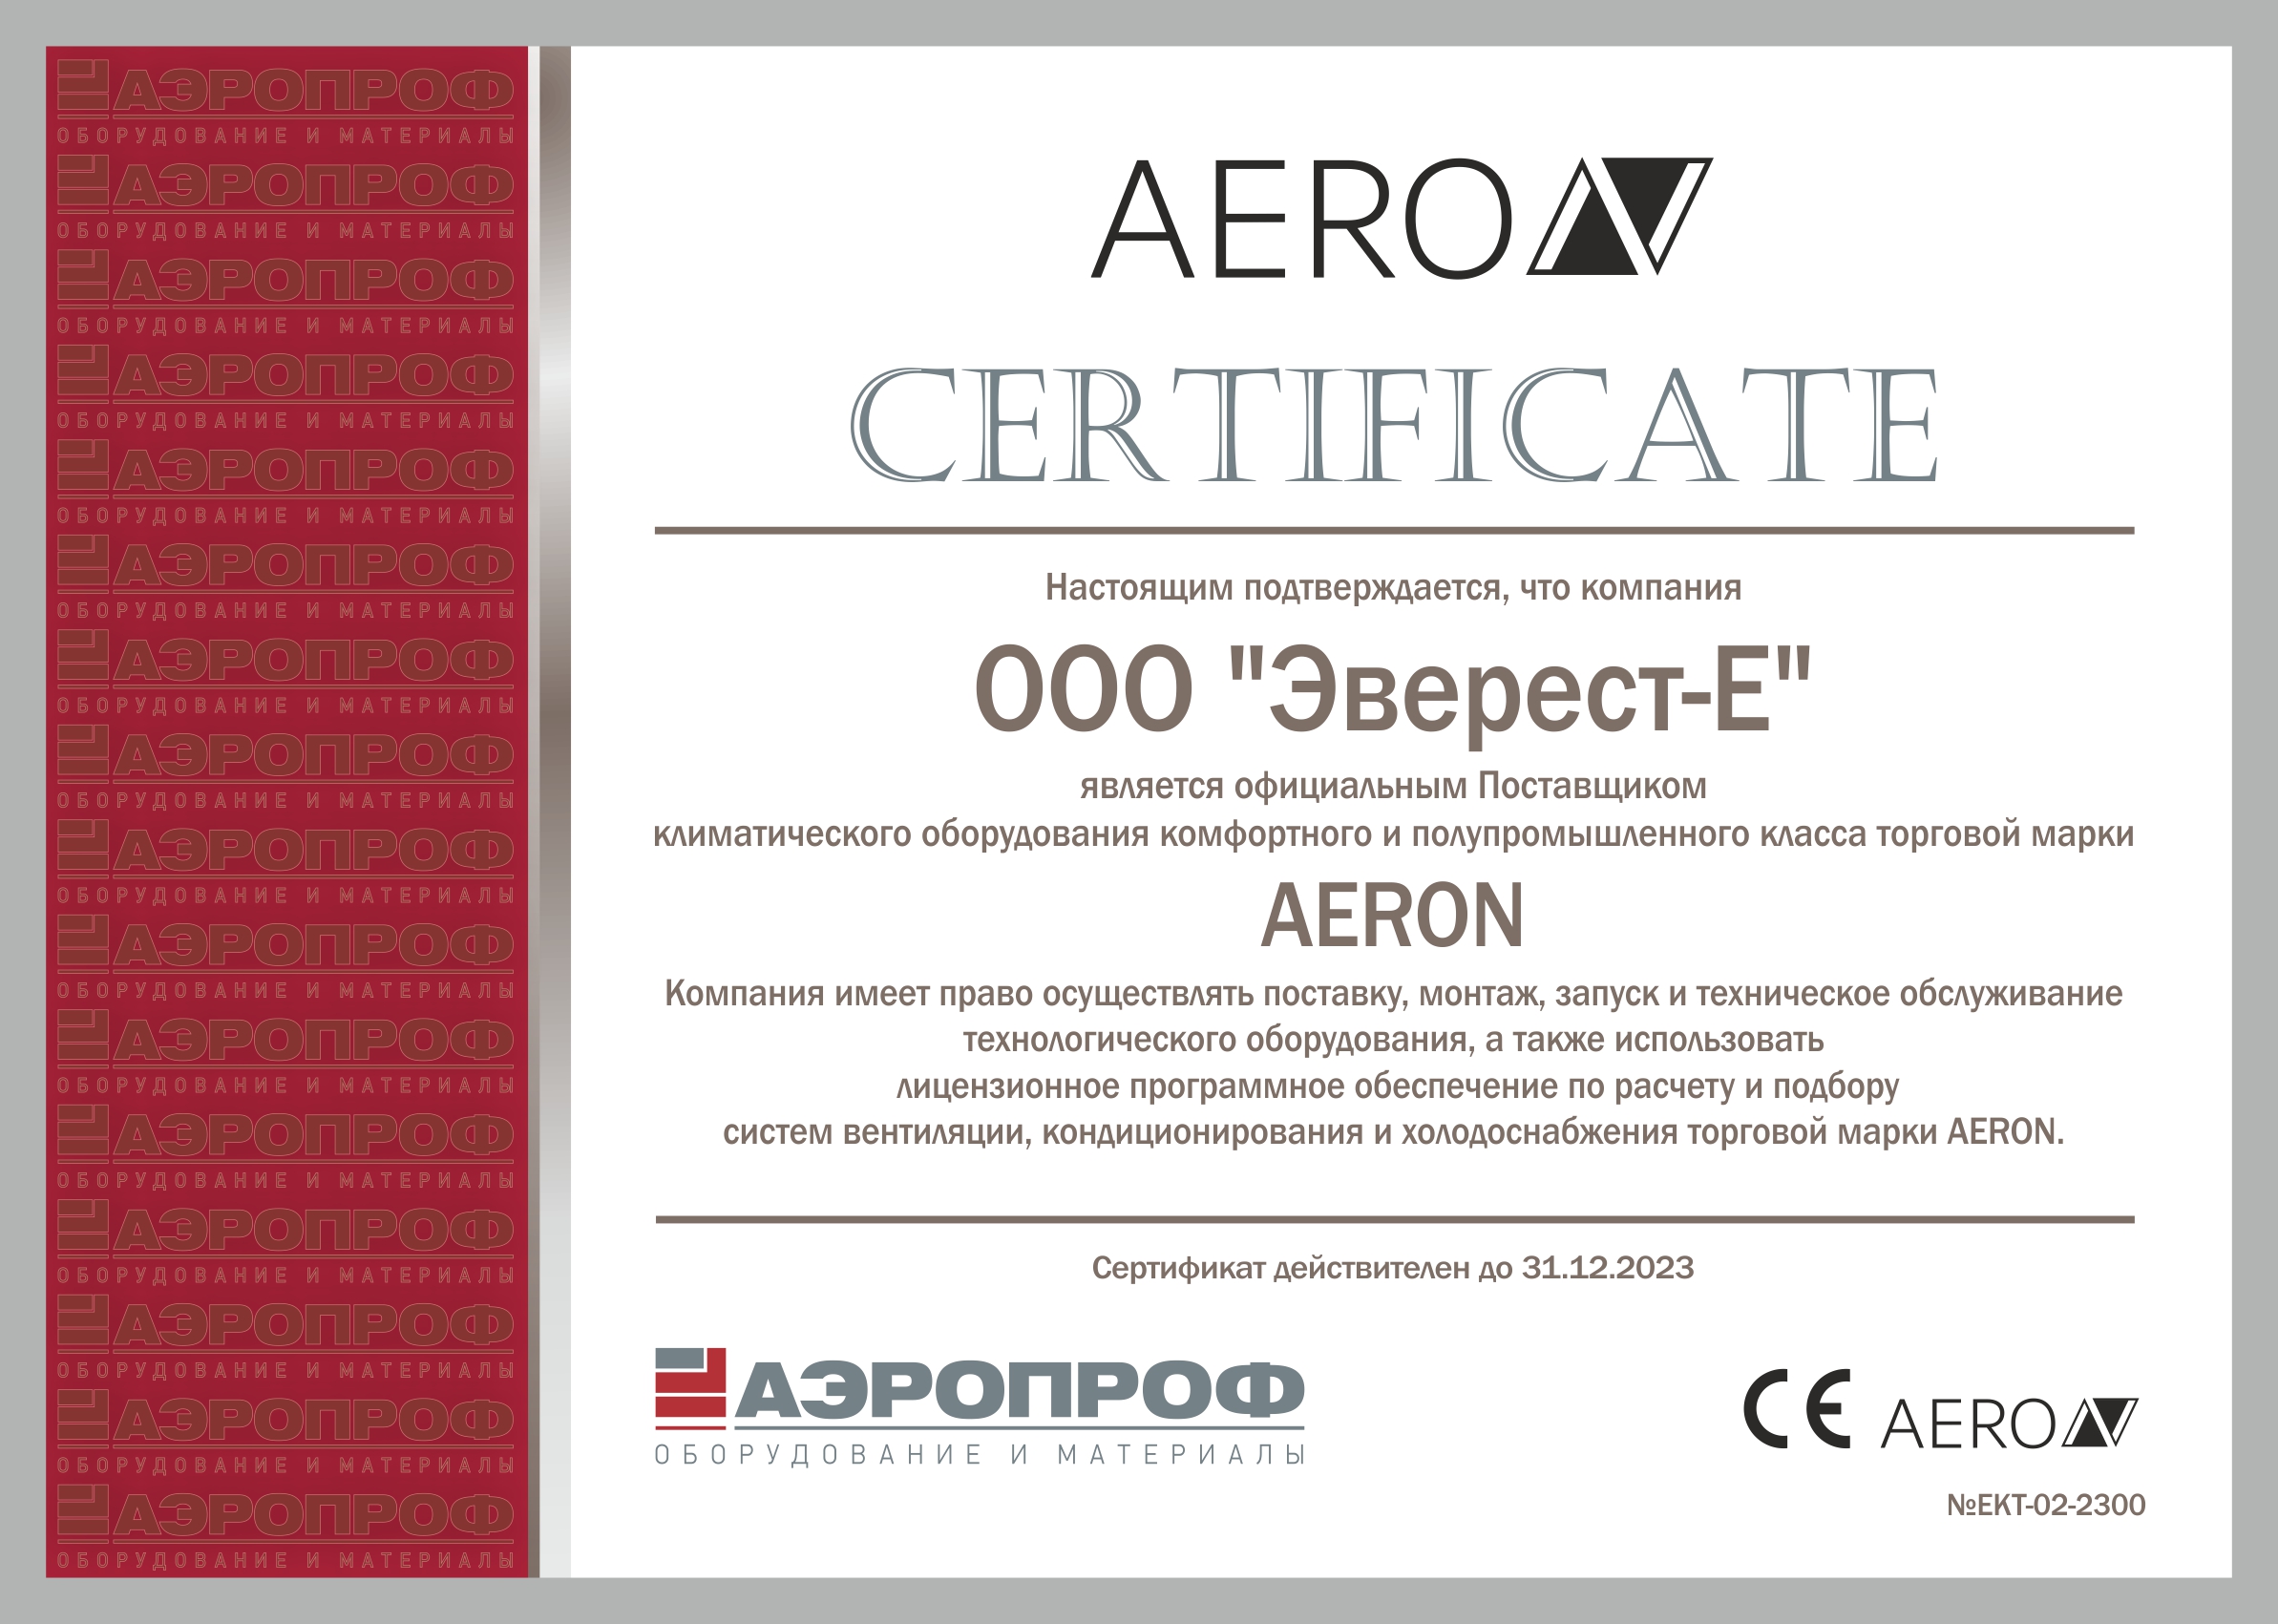 sert23-everest-aeron Kondicioner Aero ALRS-II-36IHA4-01/ALRS-II-36OHA4-01 kypit v Ekaterinbyrge v internet-magazine KlimatMarket96.ry Сертификат официального дилера